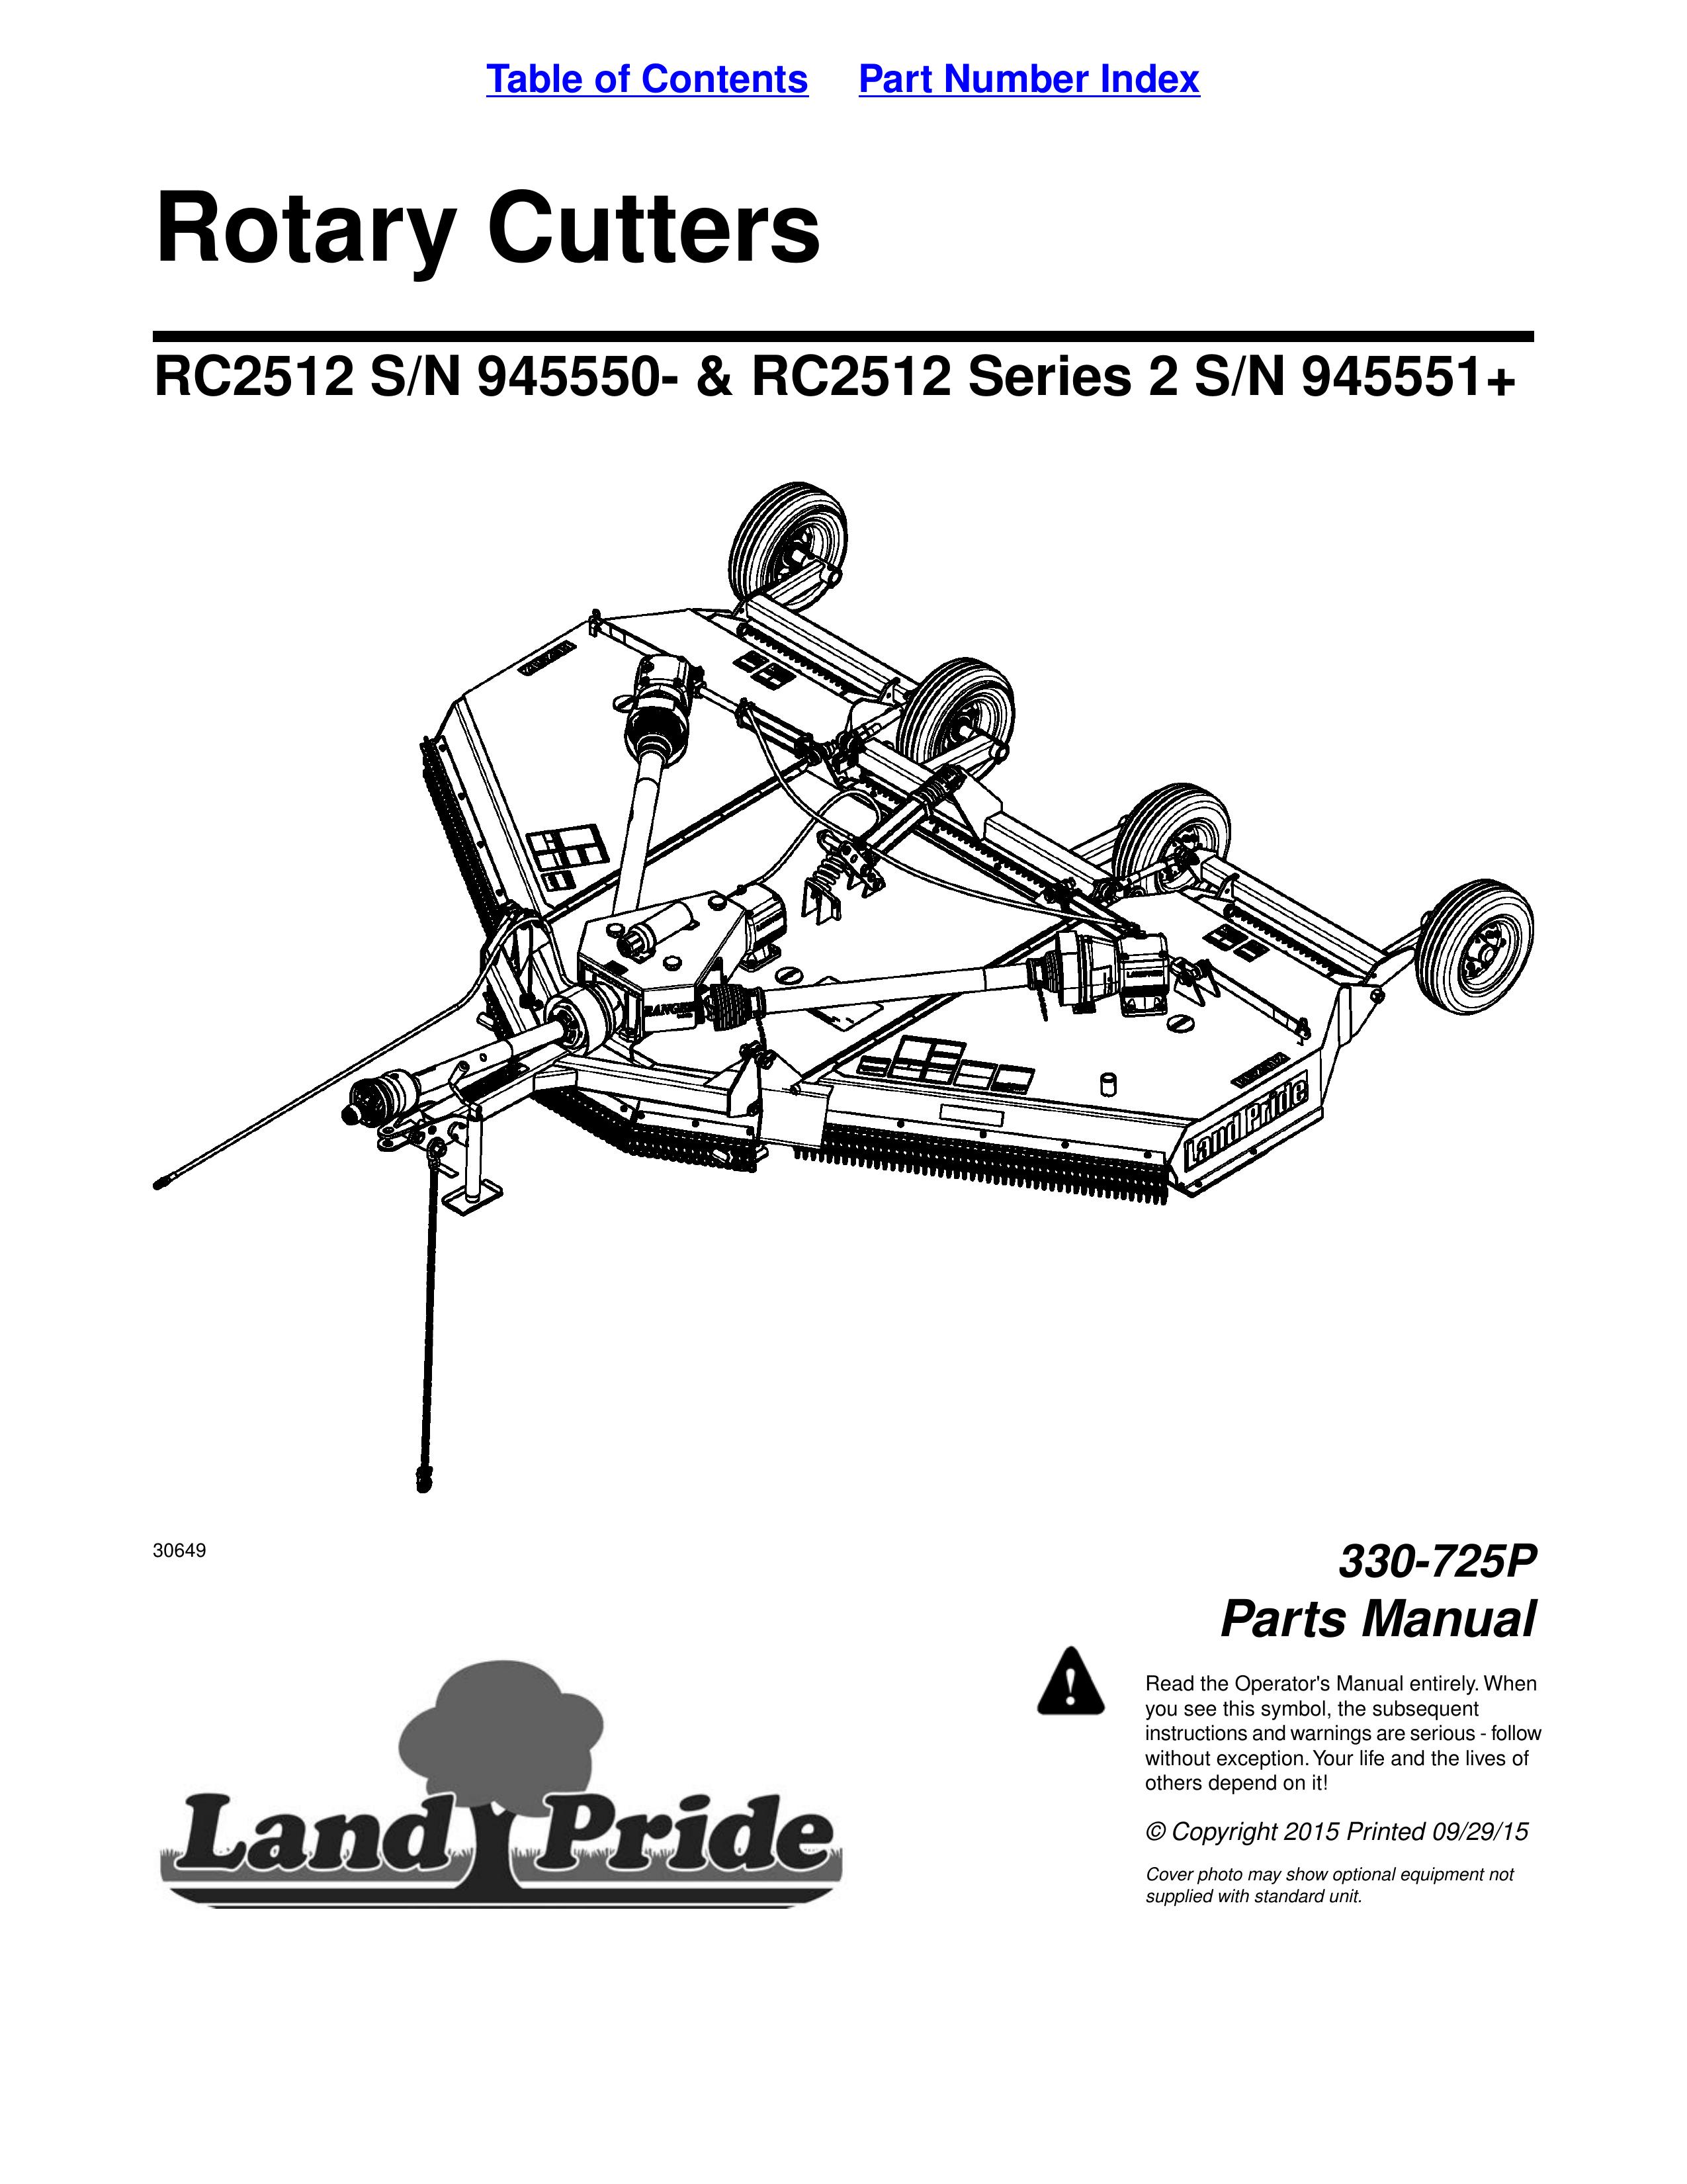 Land Pride RC2512 Series 2 Brush Cutter User Manual